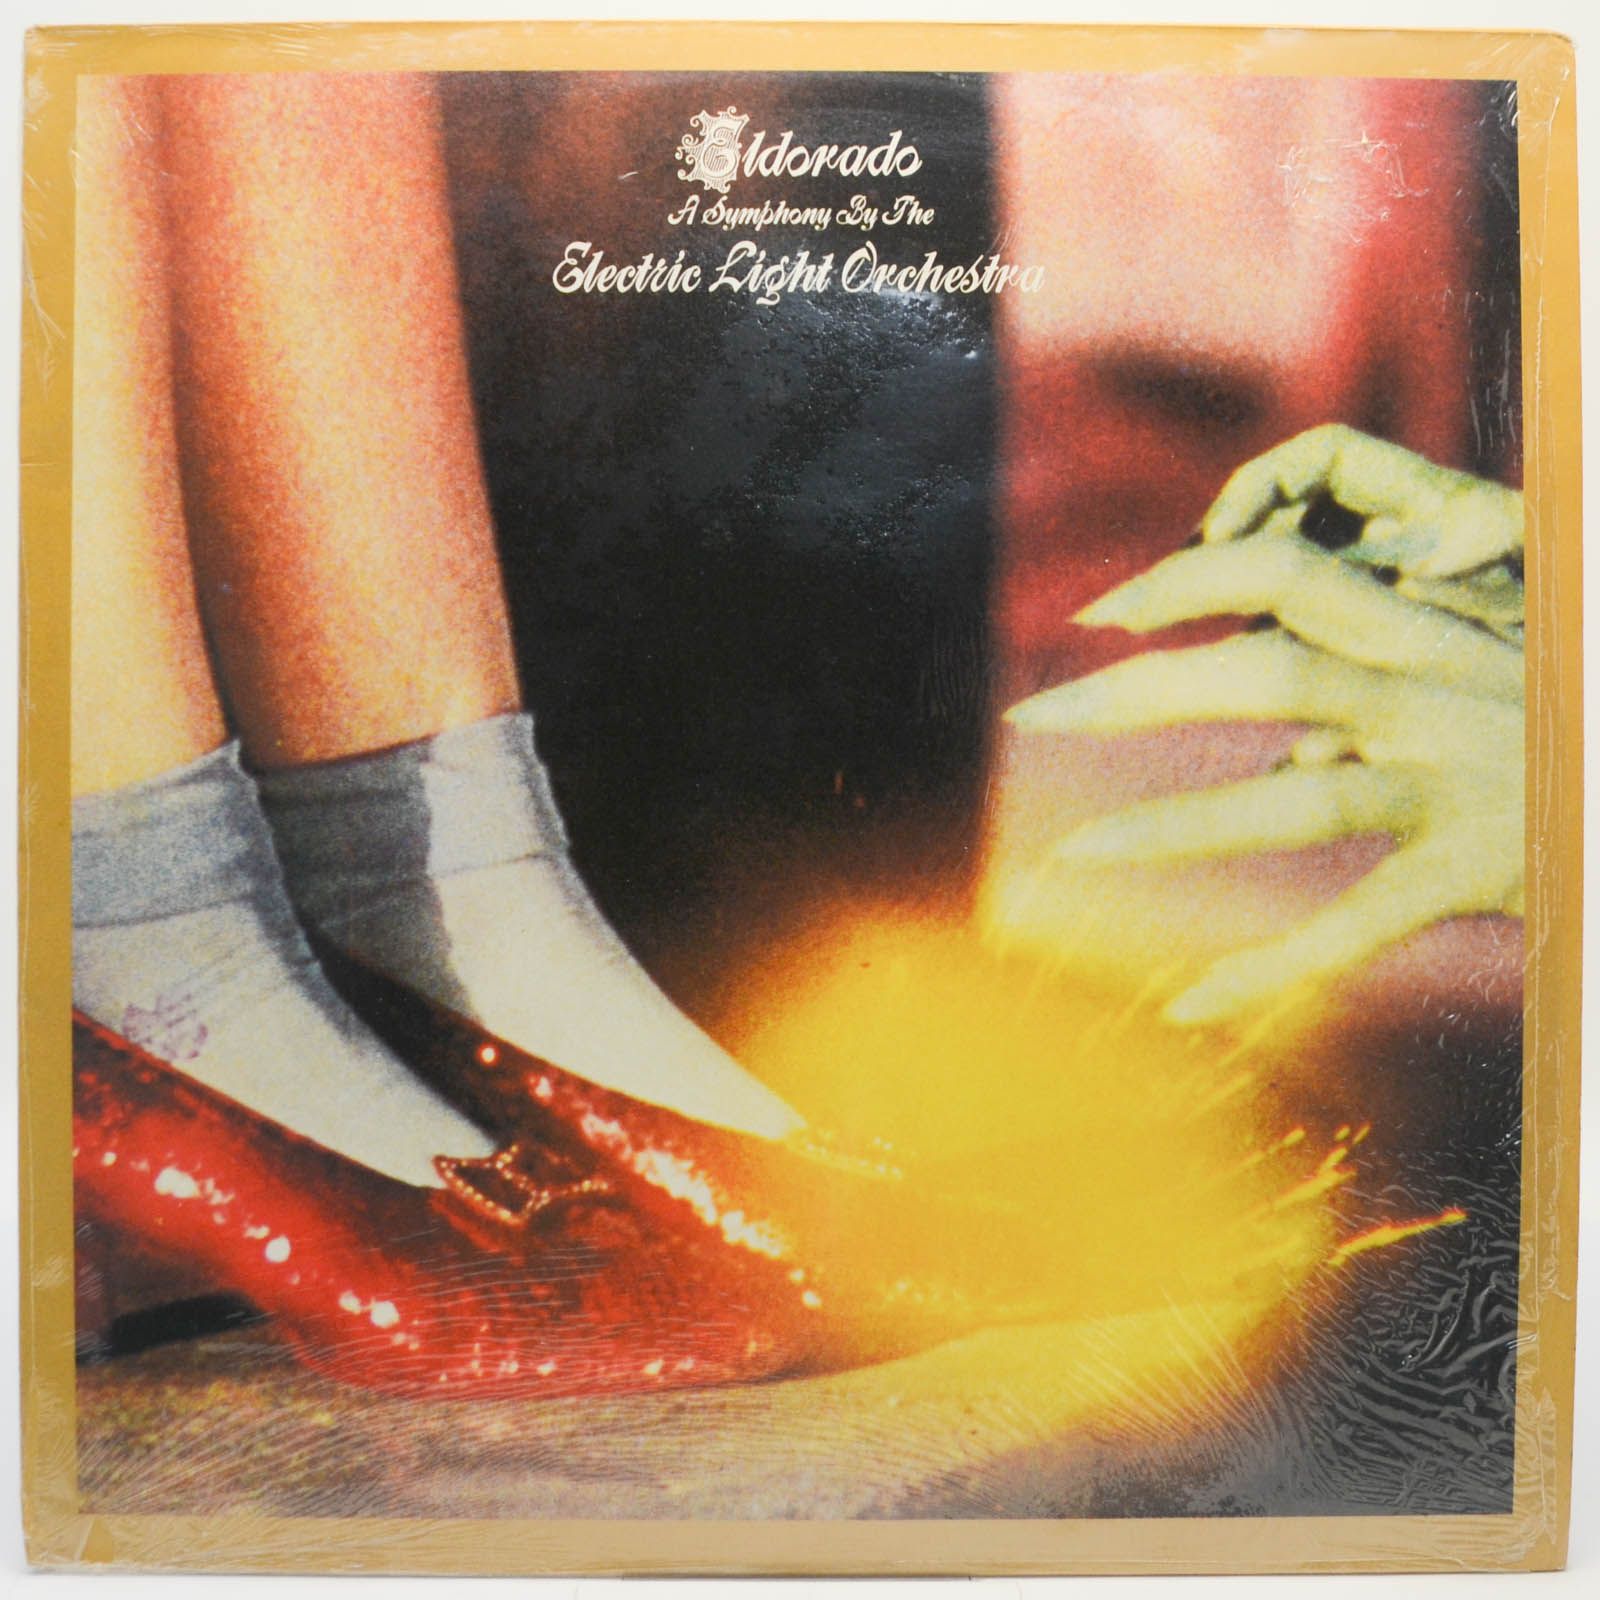 Electric Light Orchestra — Eldorado (UK), 1974